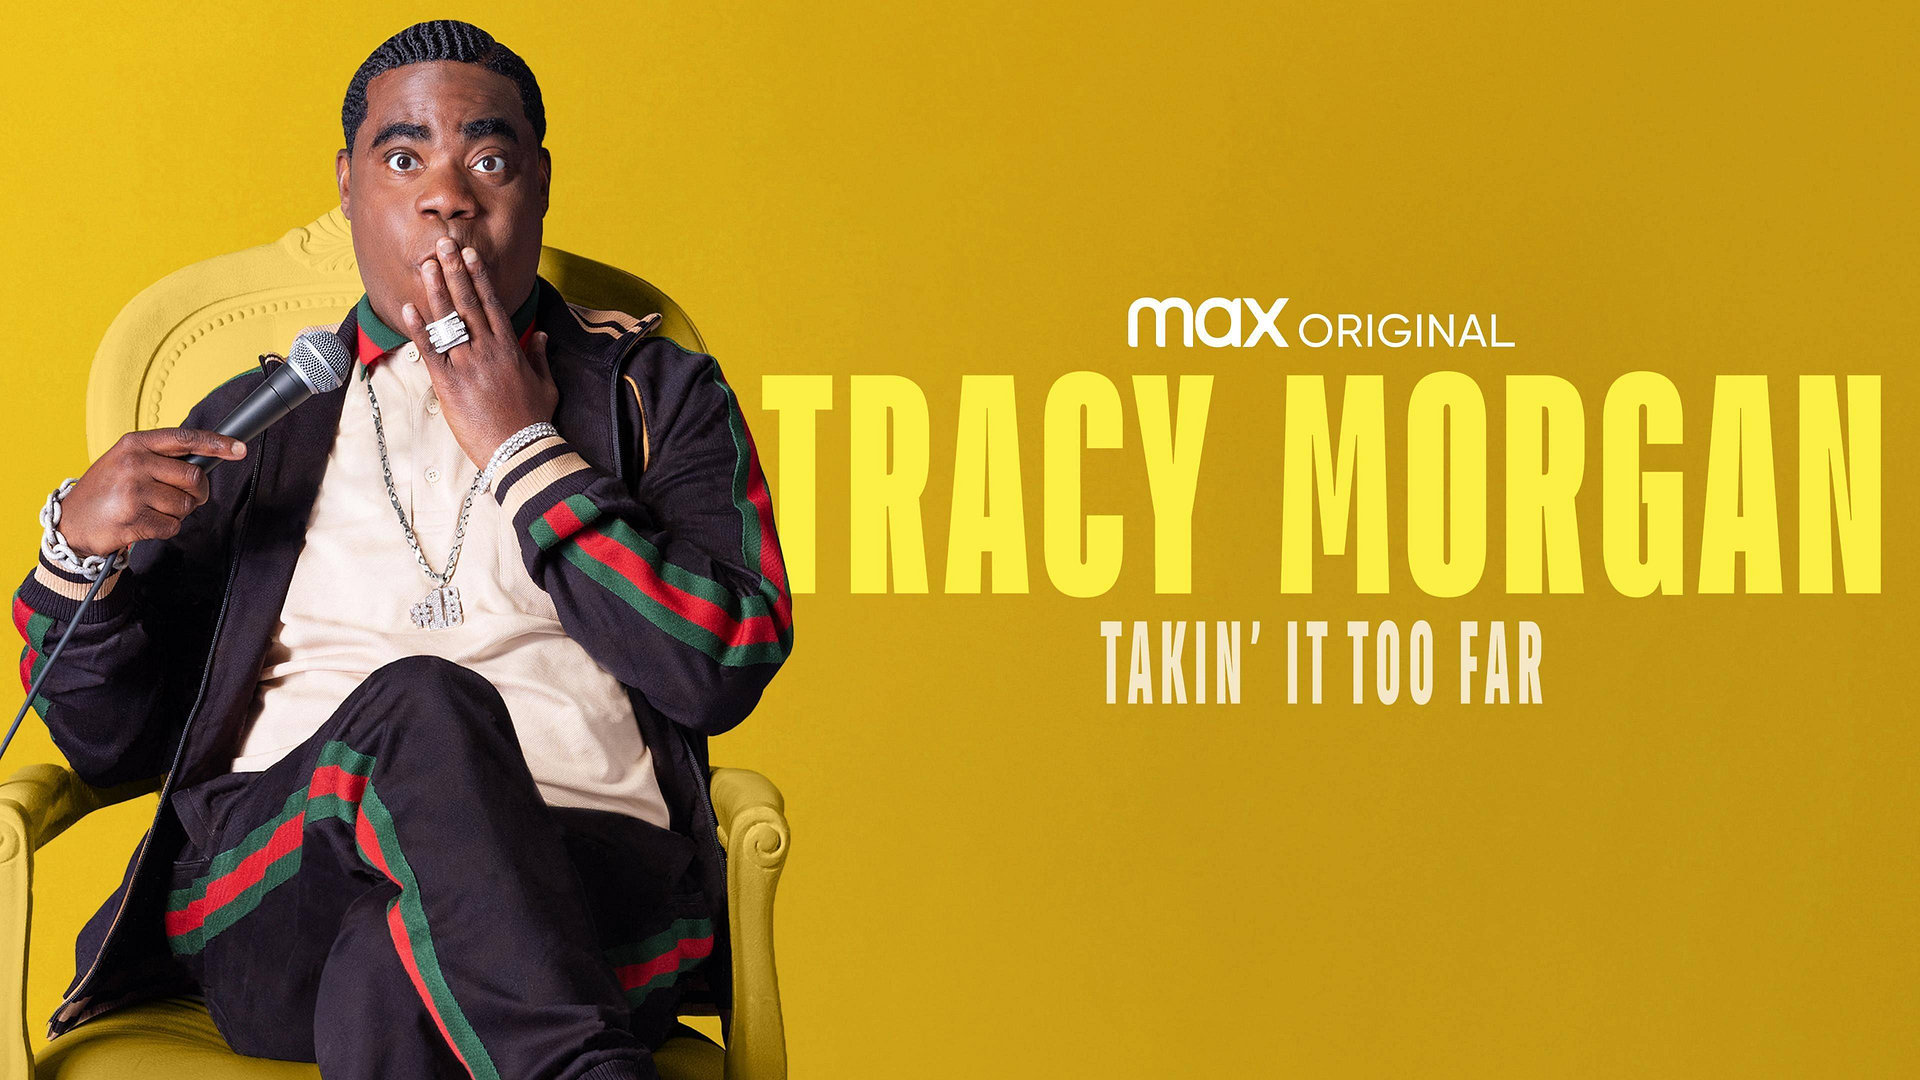 Tracy Morgan: Takin' it Too Far